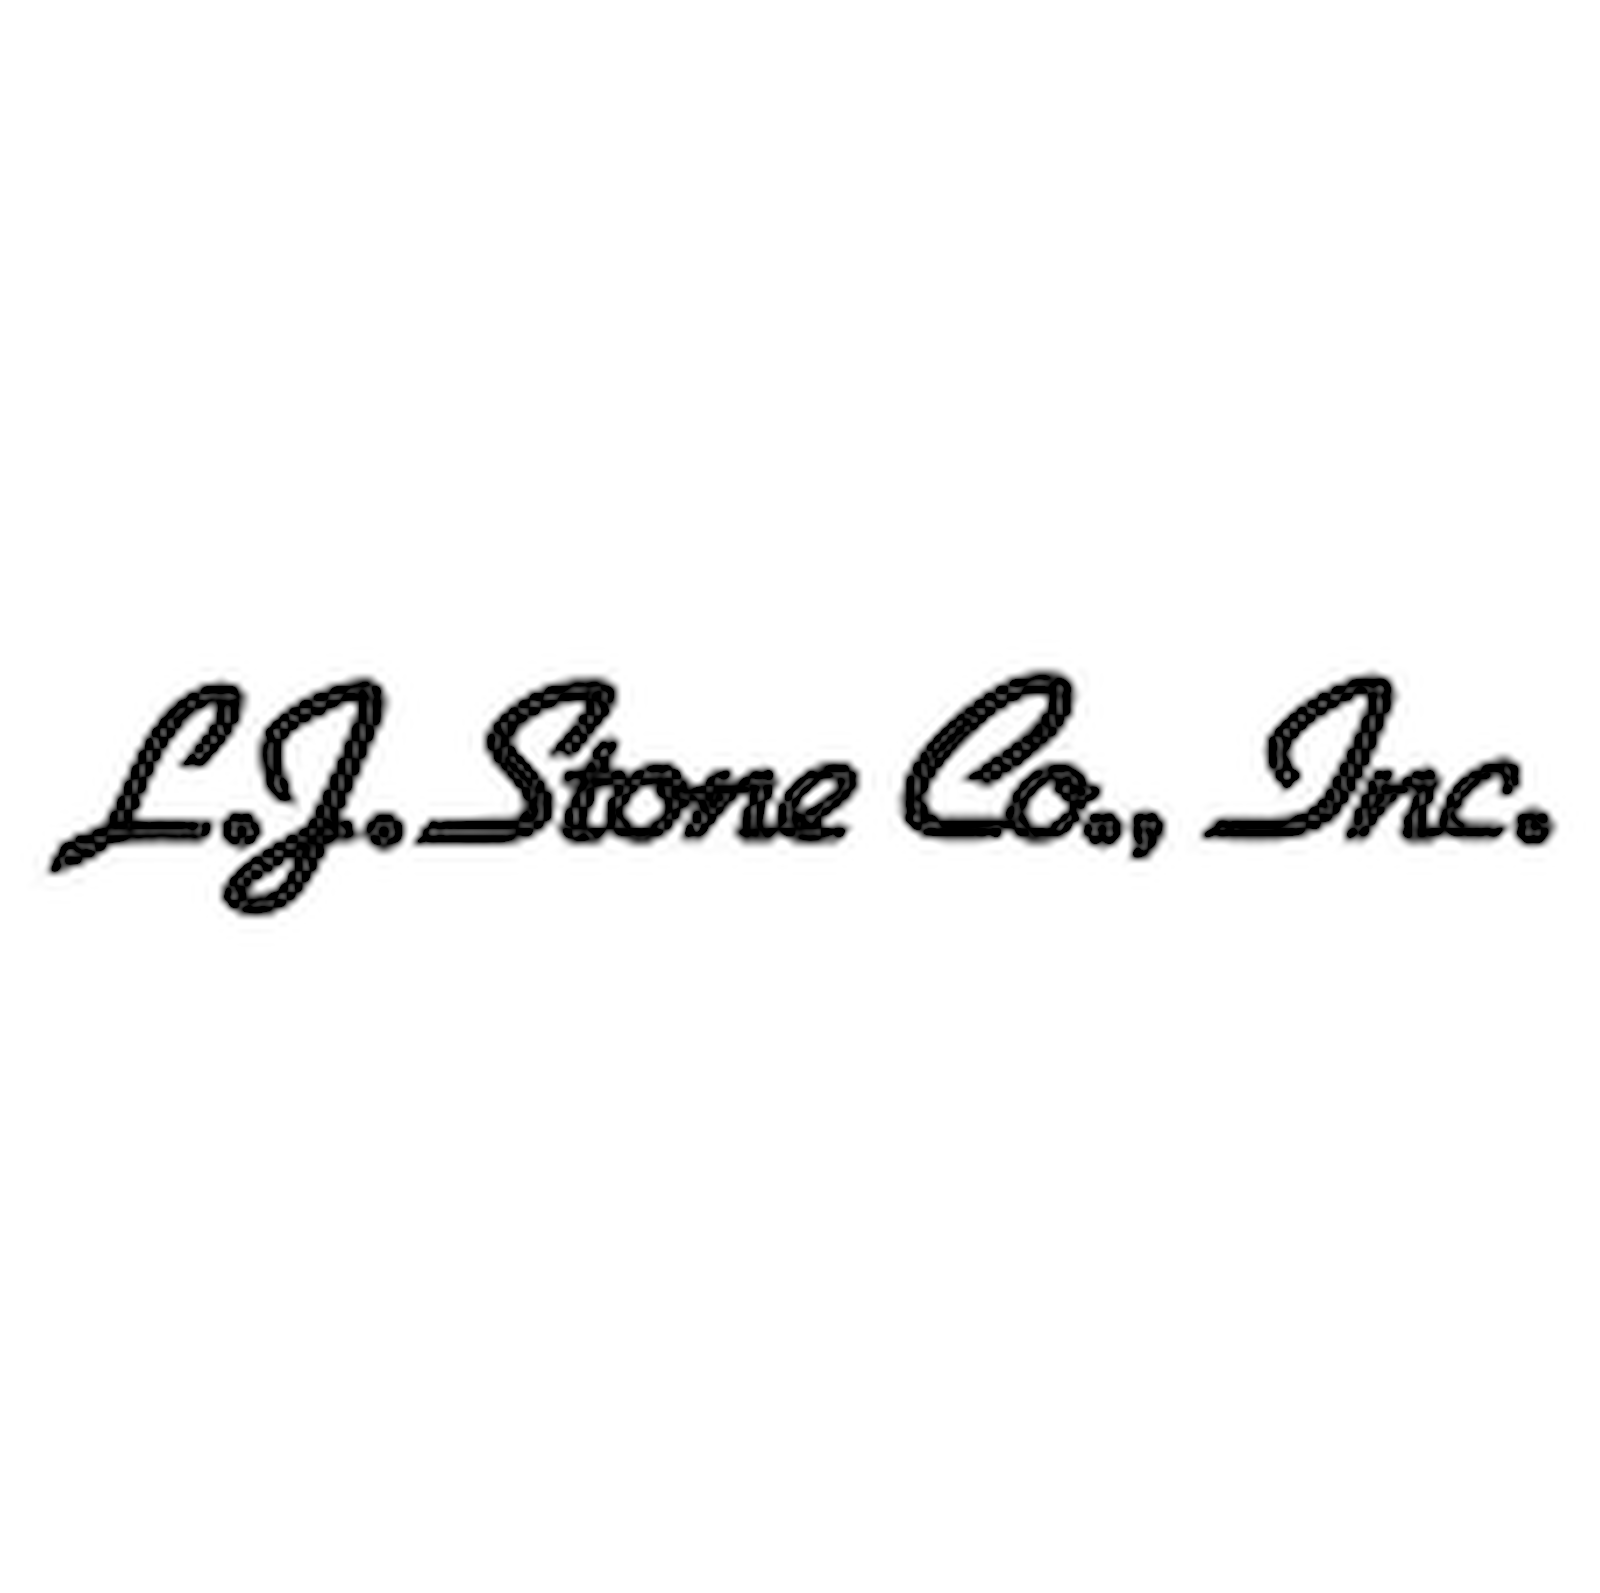 LJ Stone